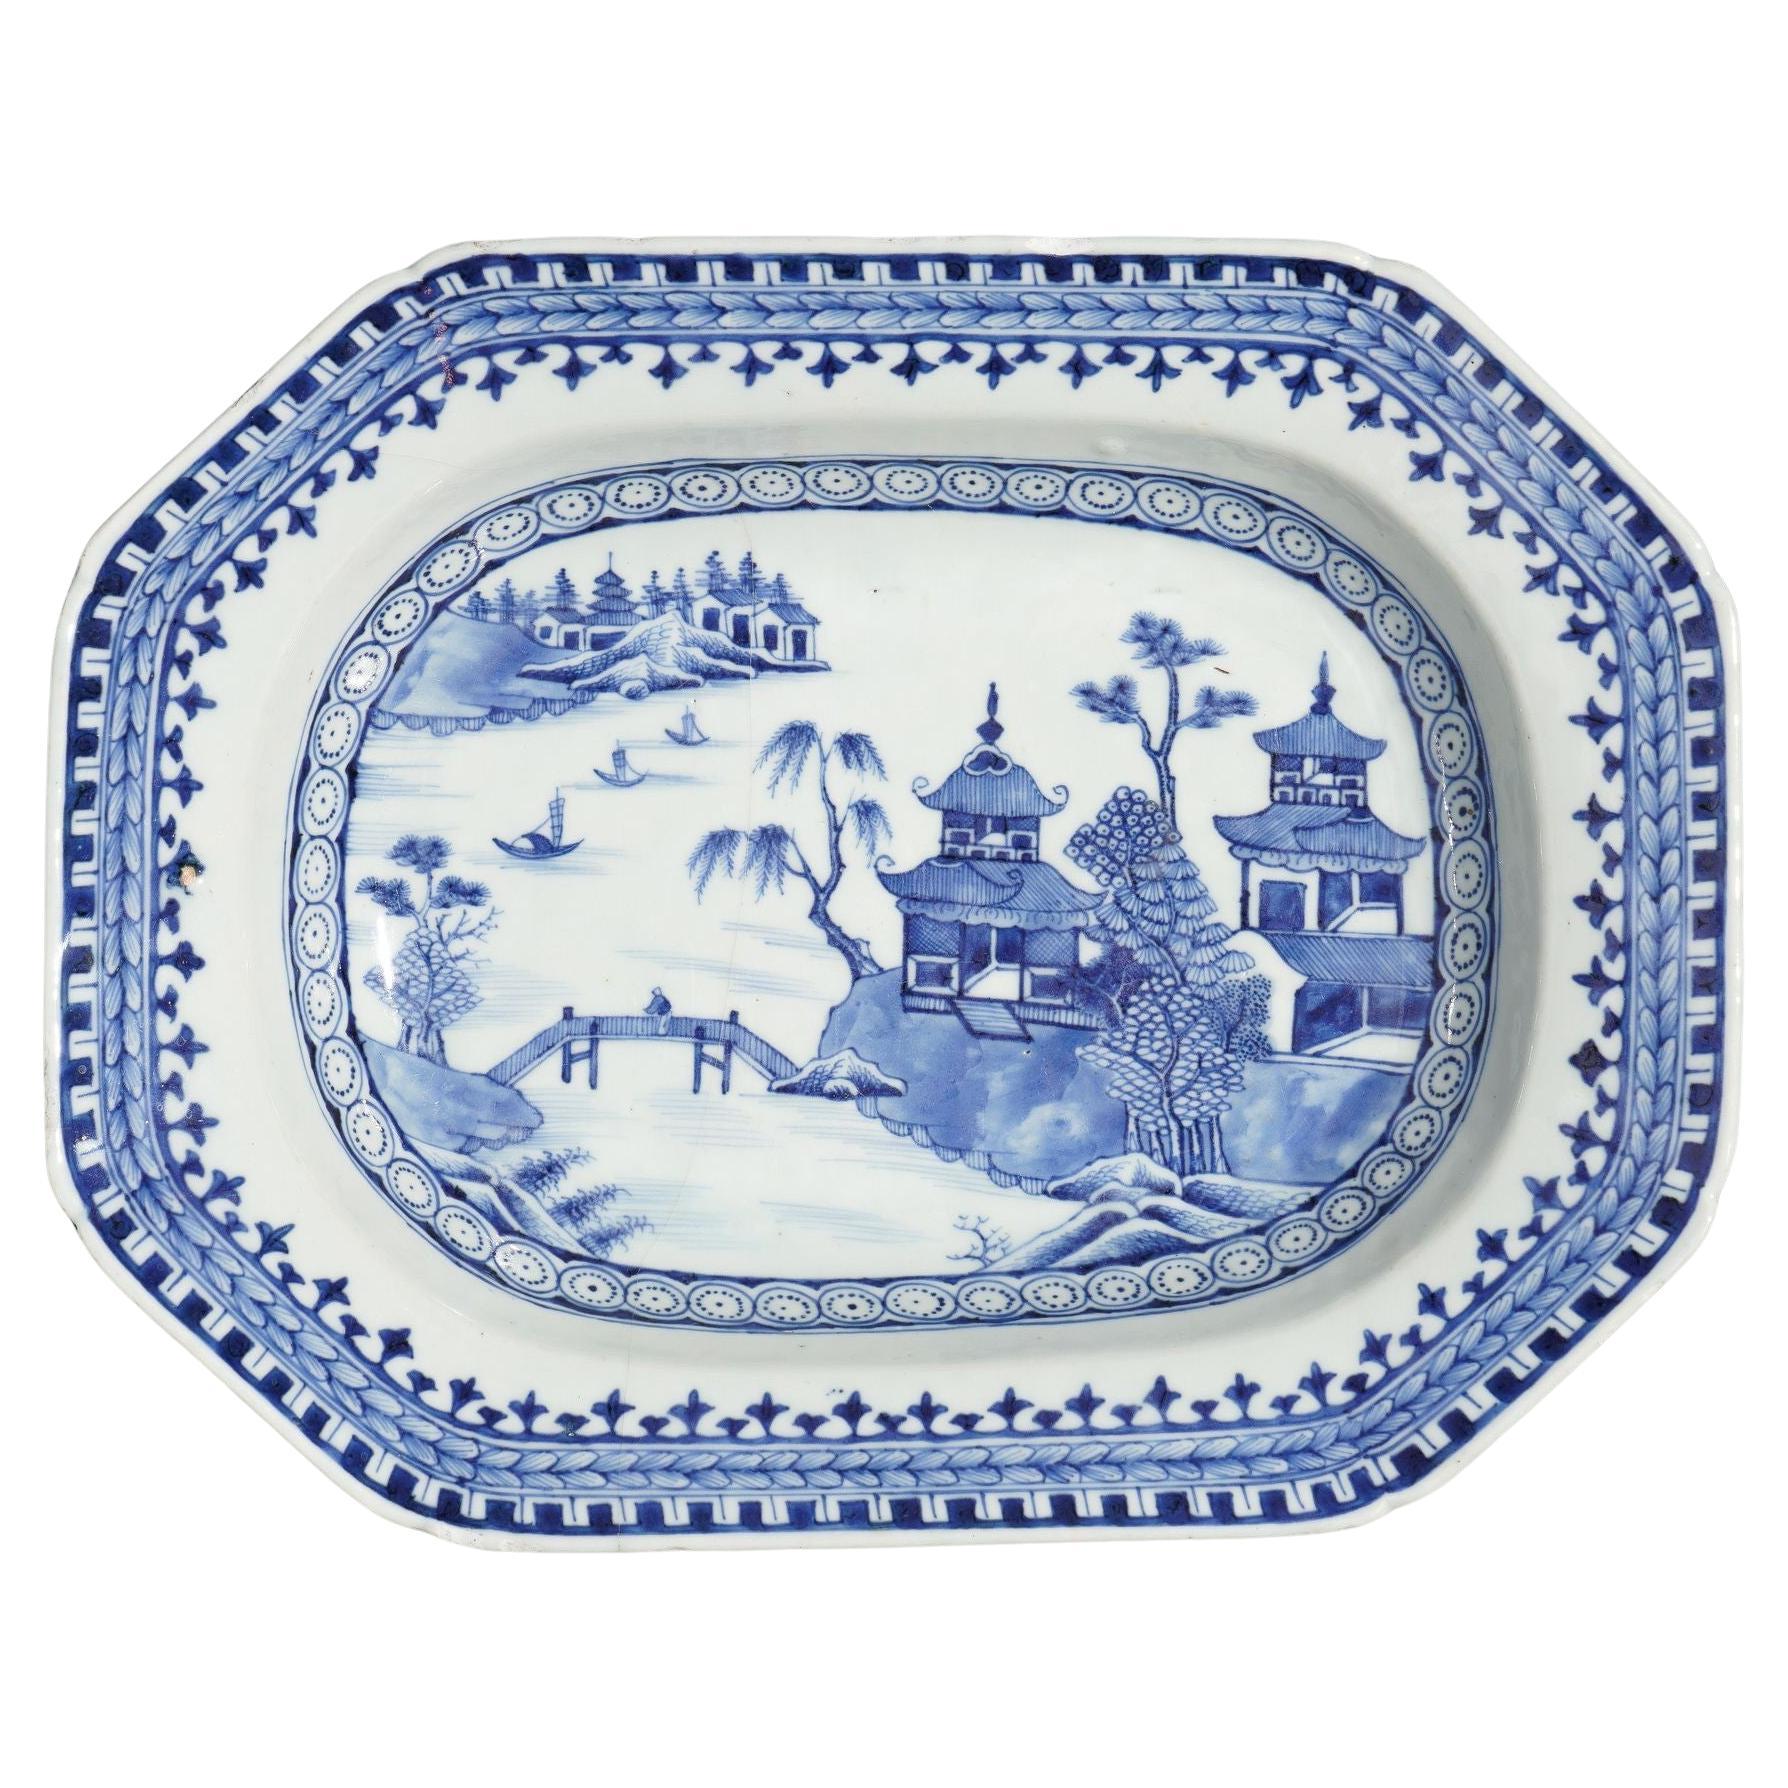 China trade export octagonal porcelain platter, c. 1800's For Sale